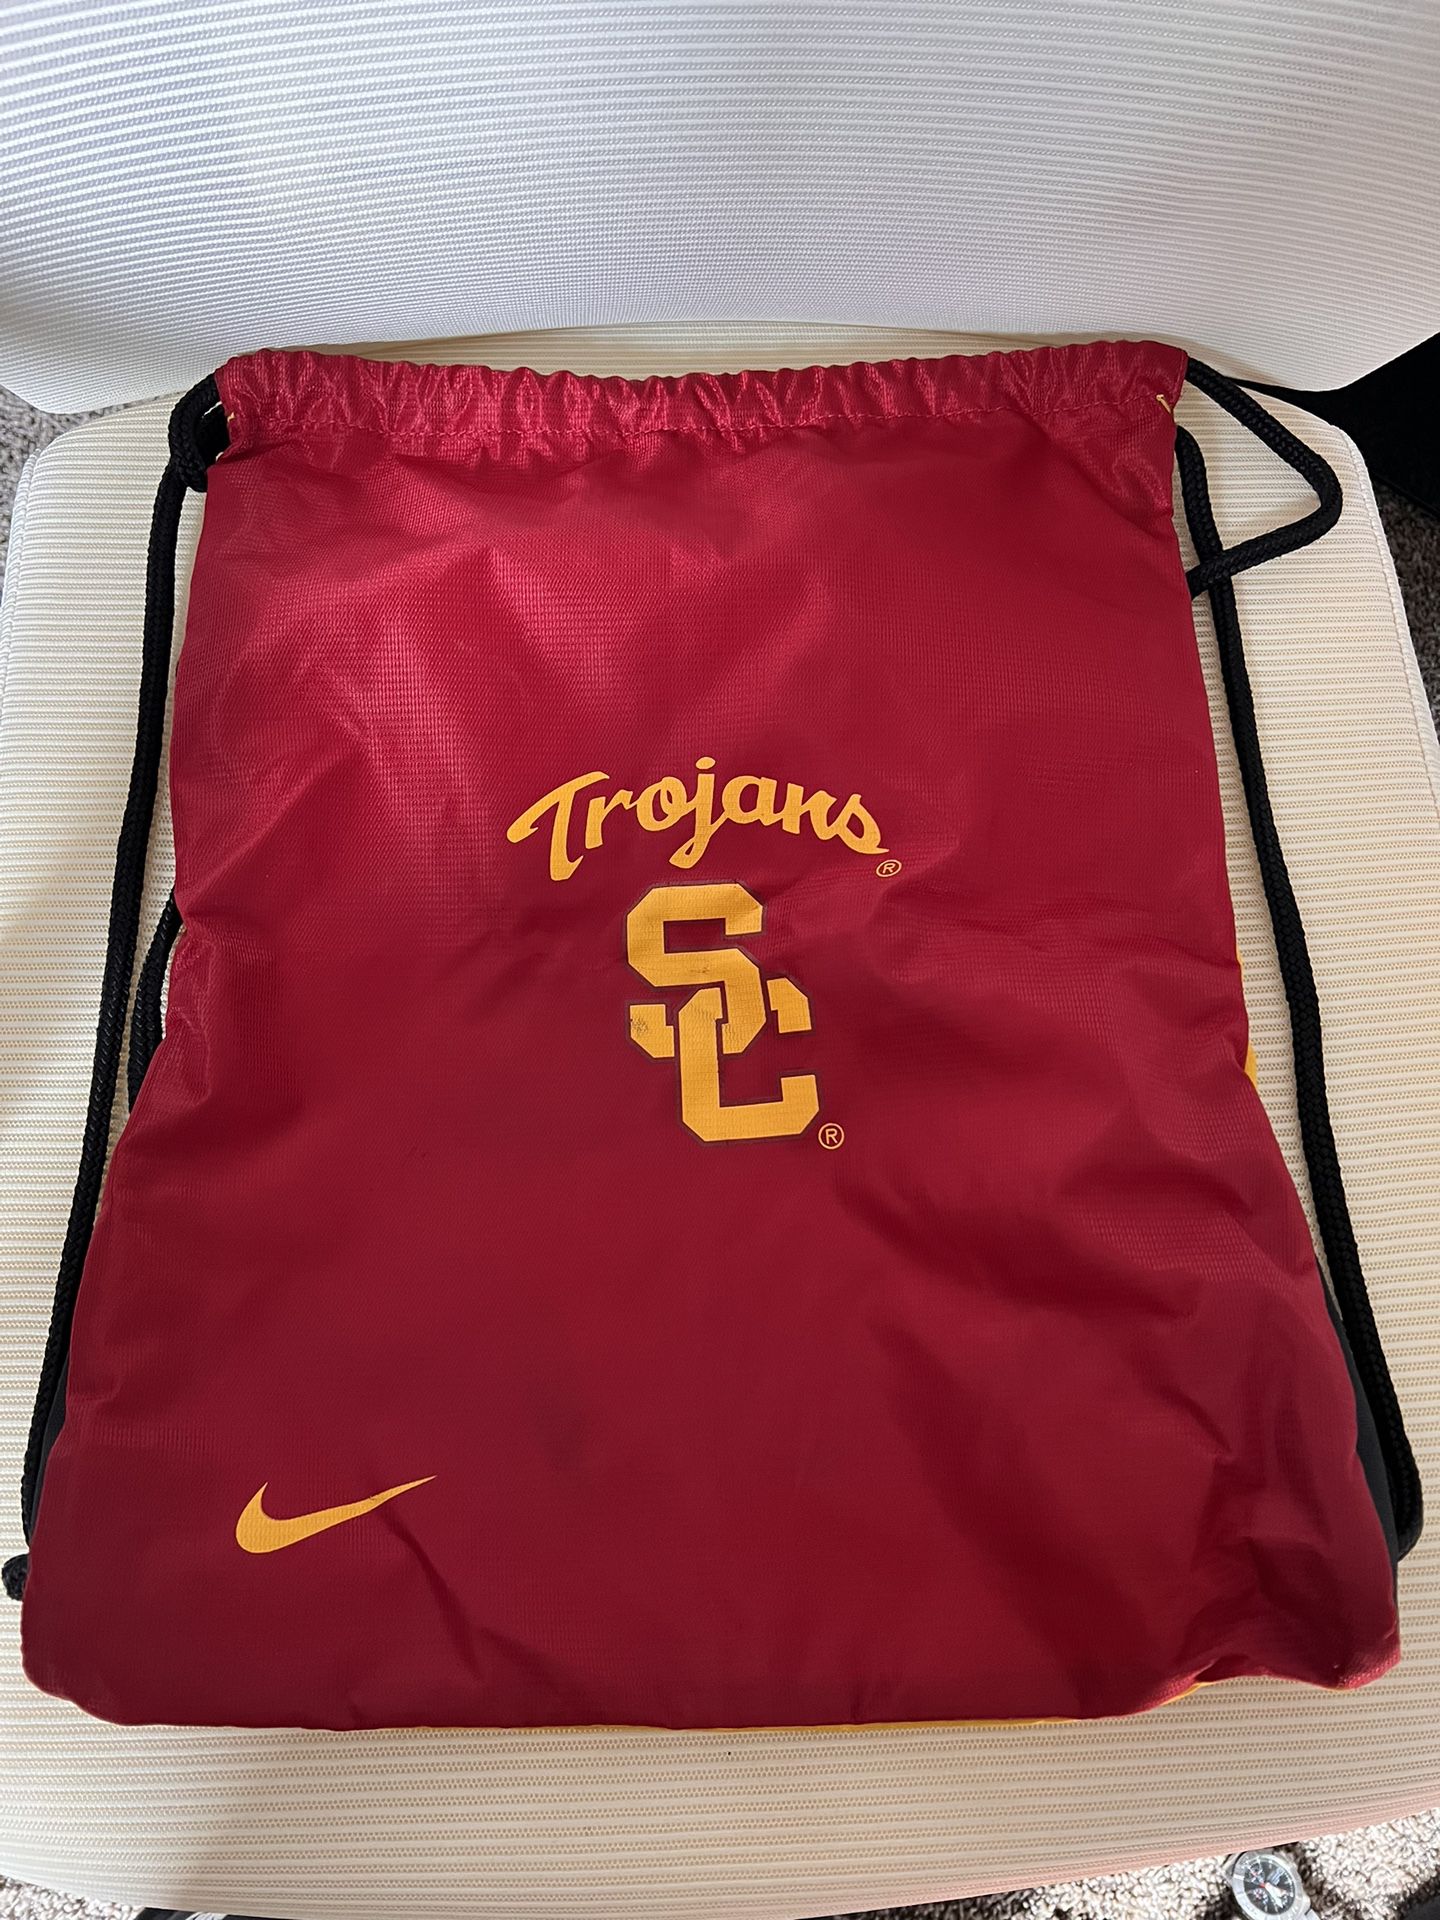 USC Trojans Drawstring Bag